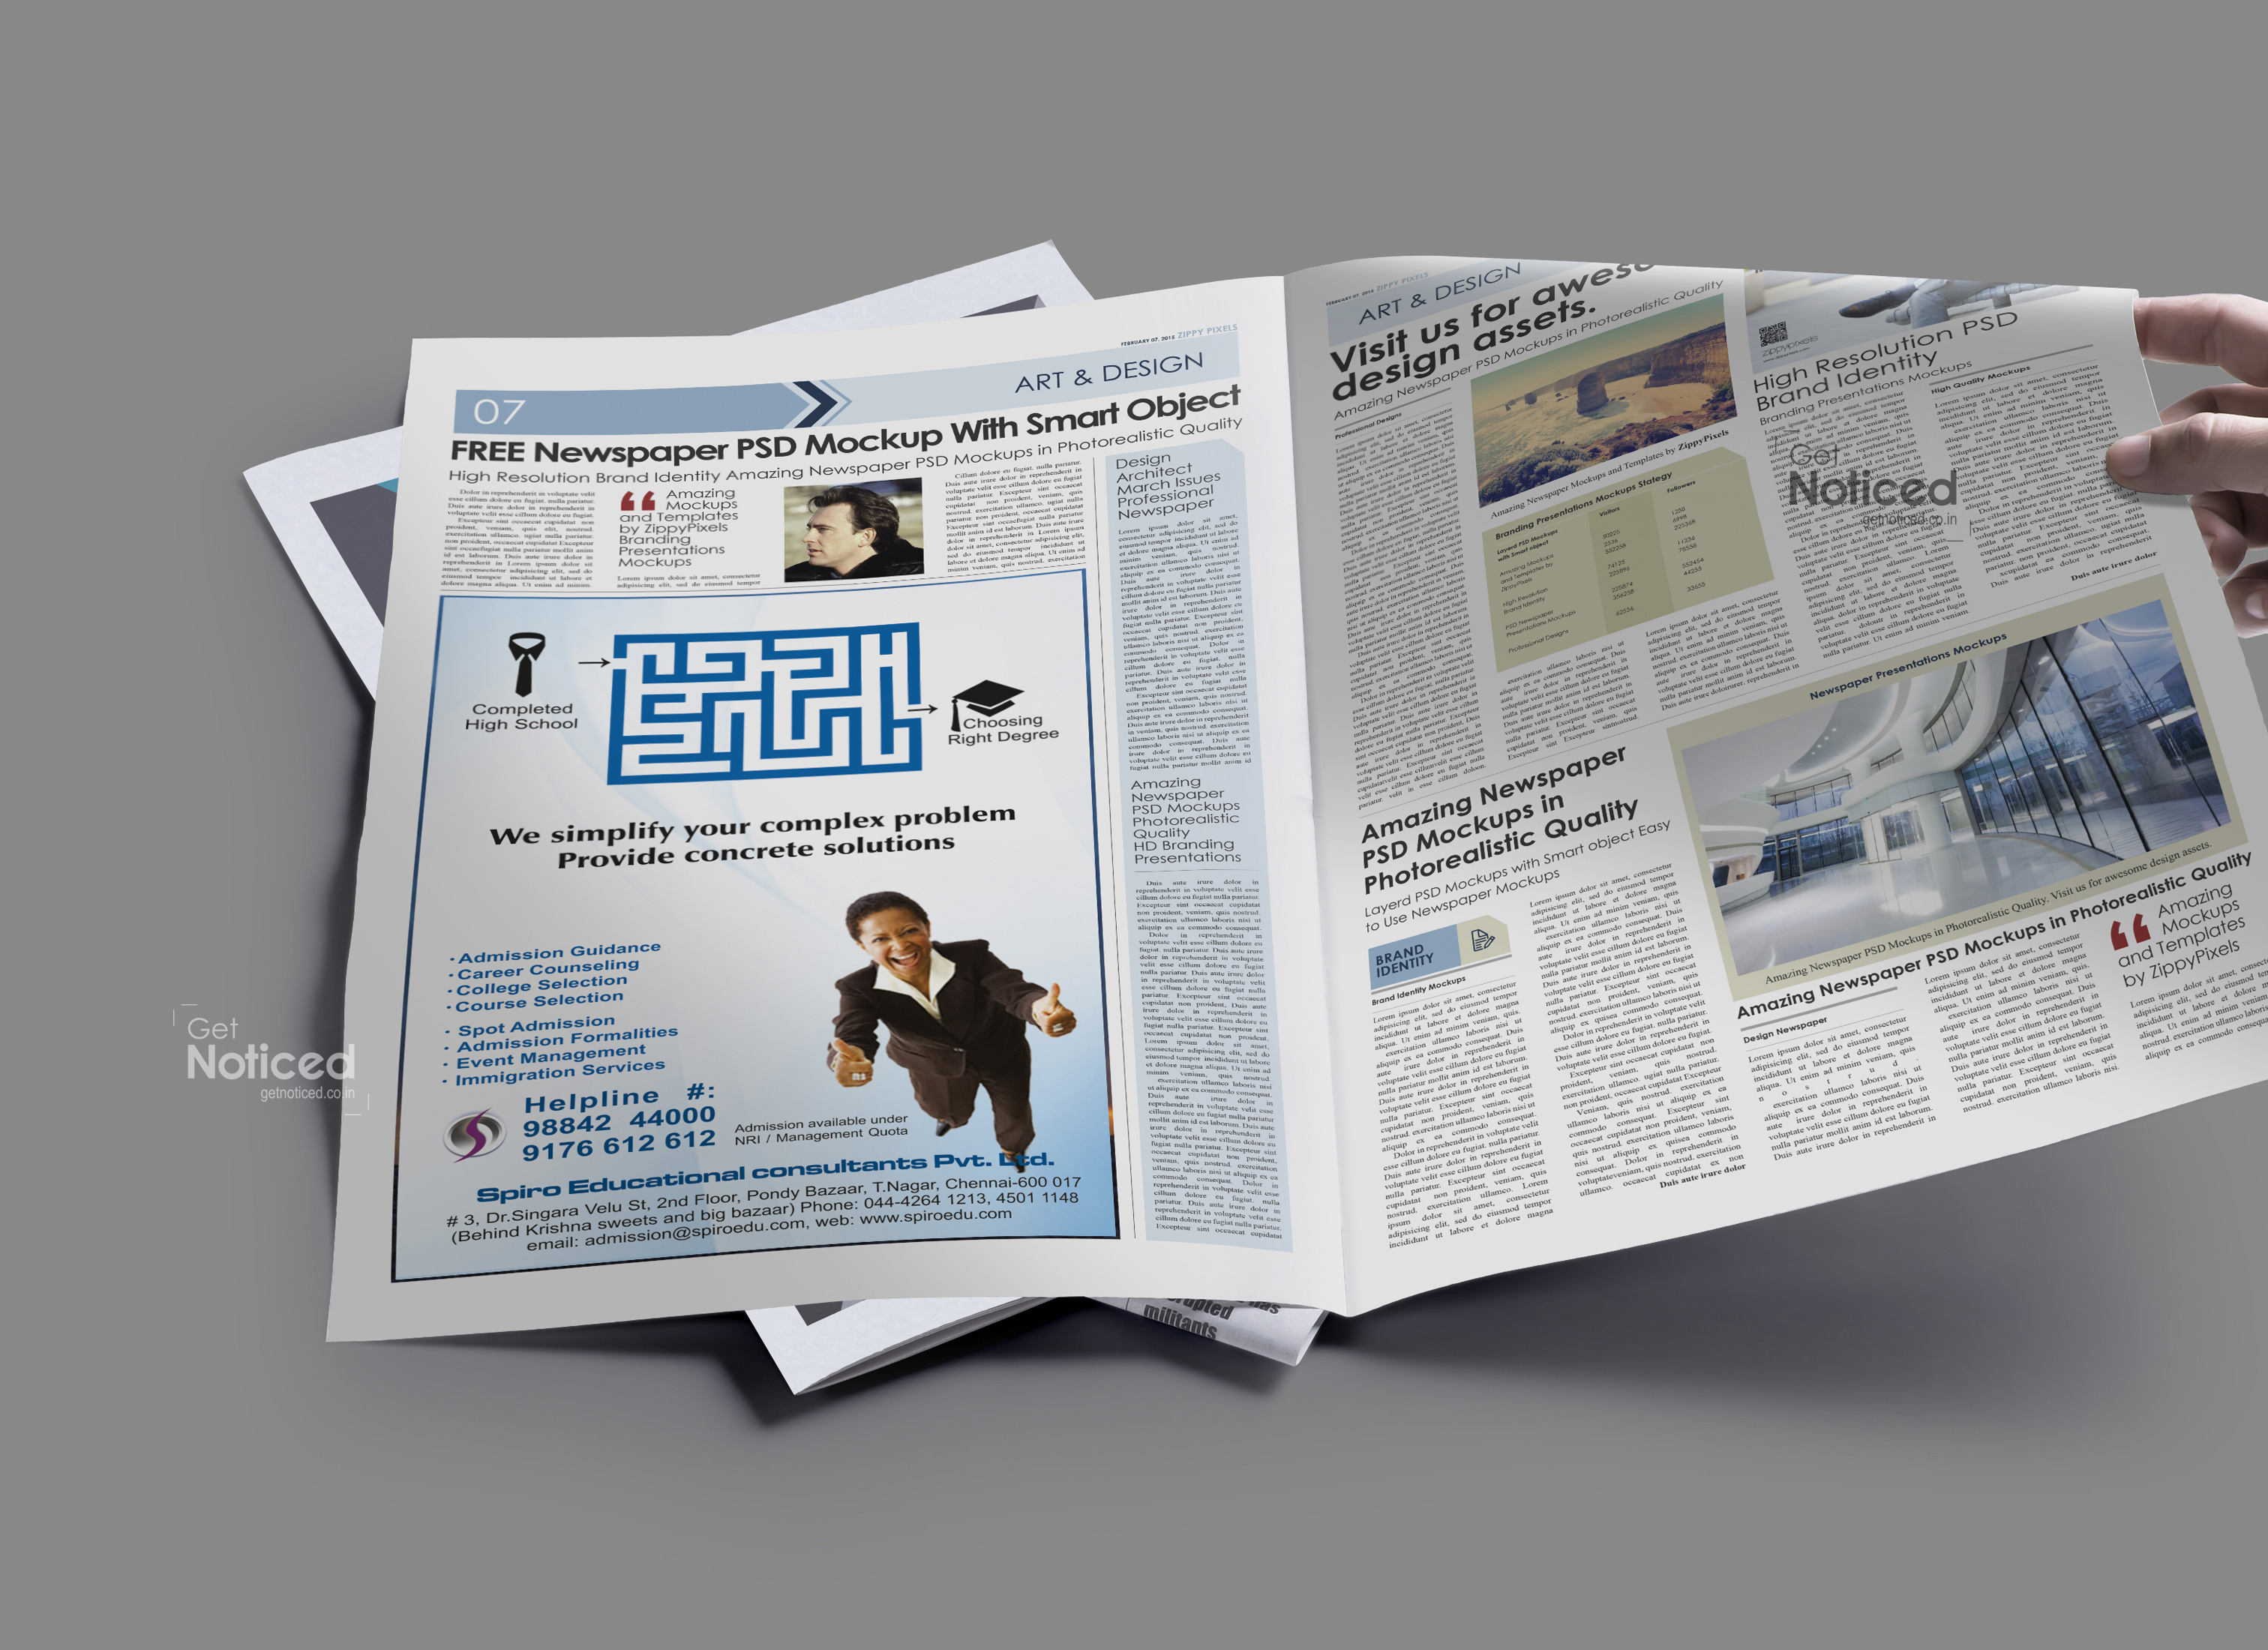 Spiro News Paper Ad Design